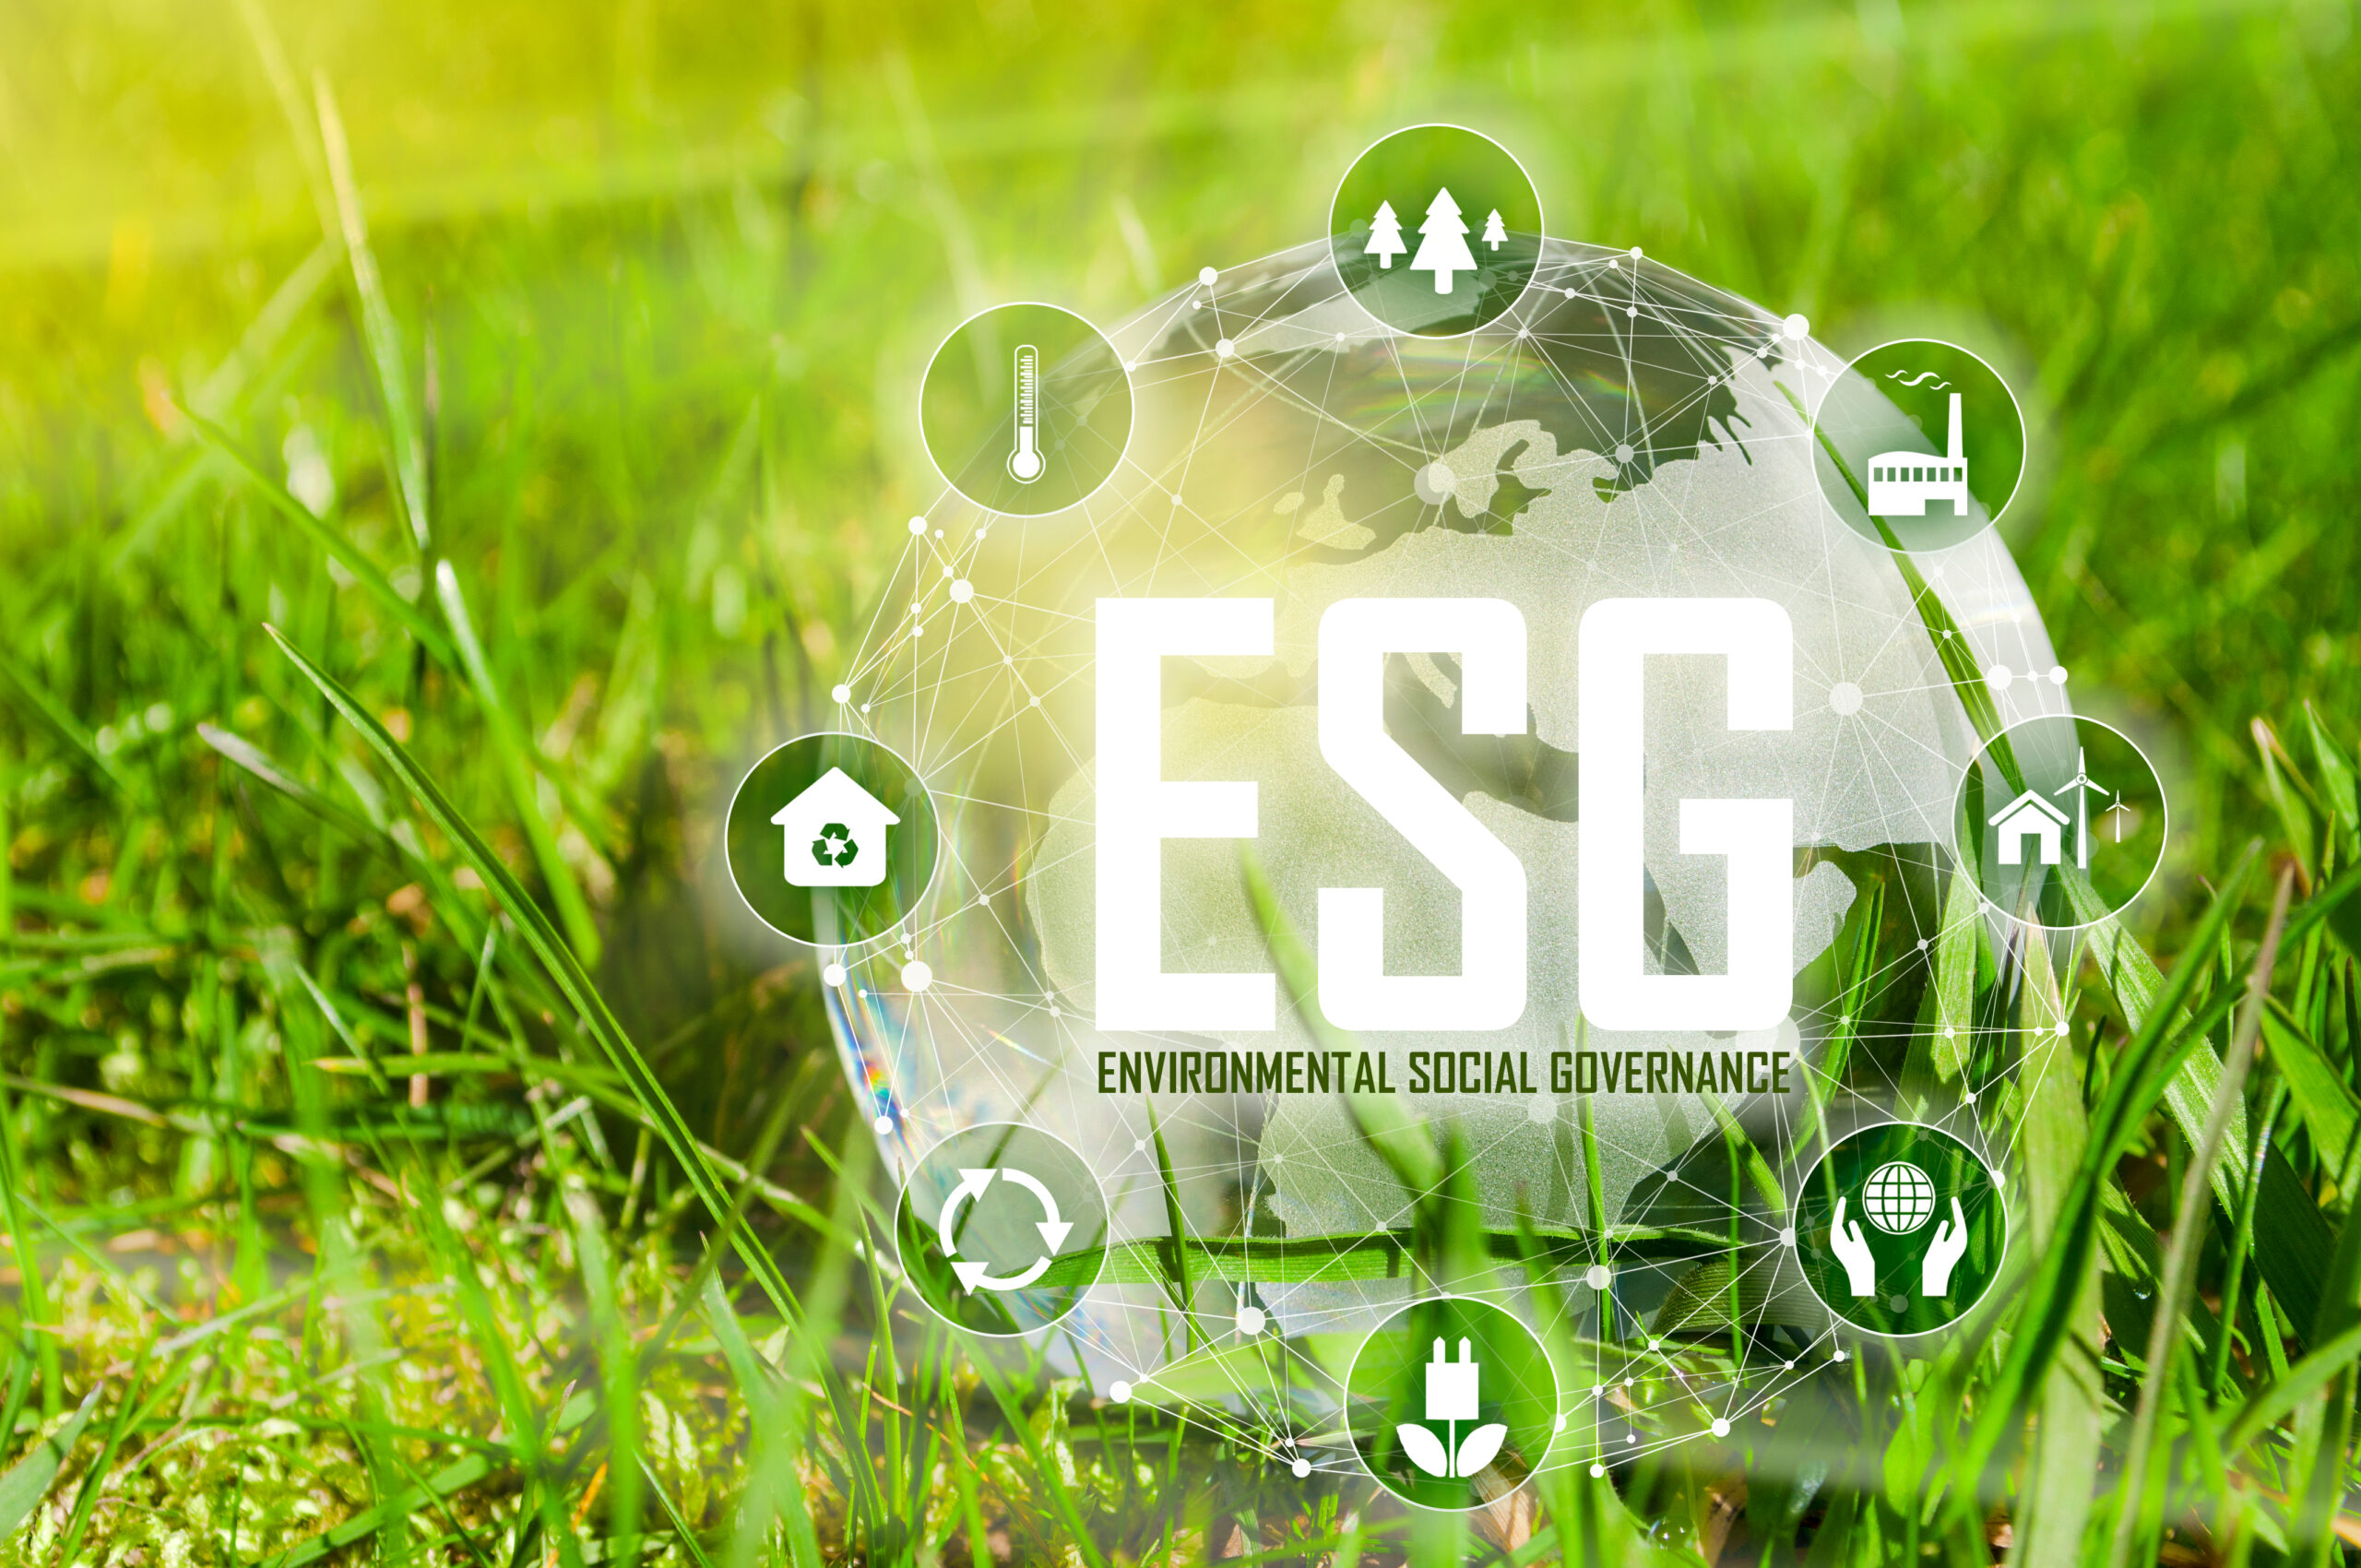 esg, environment, social, governance